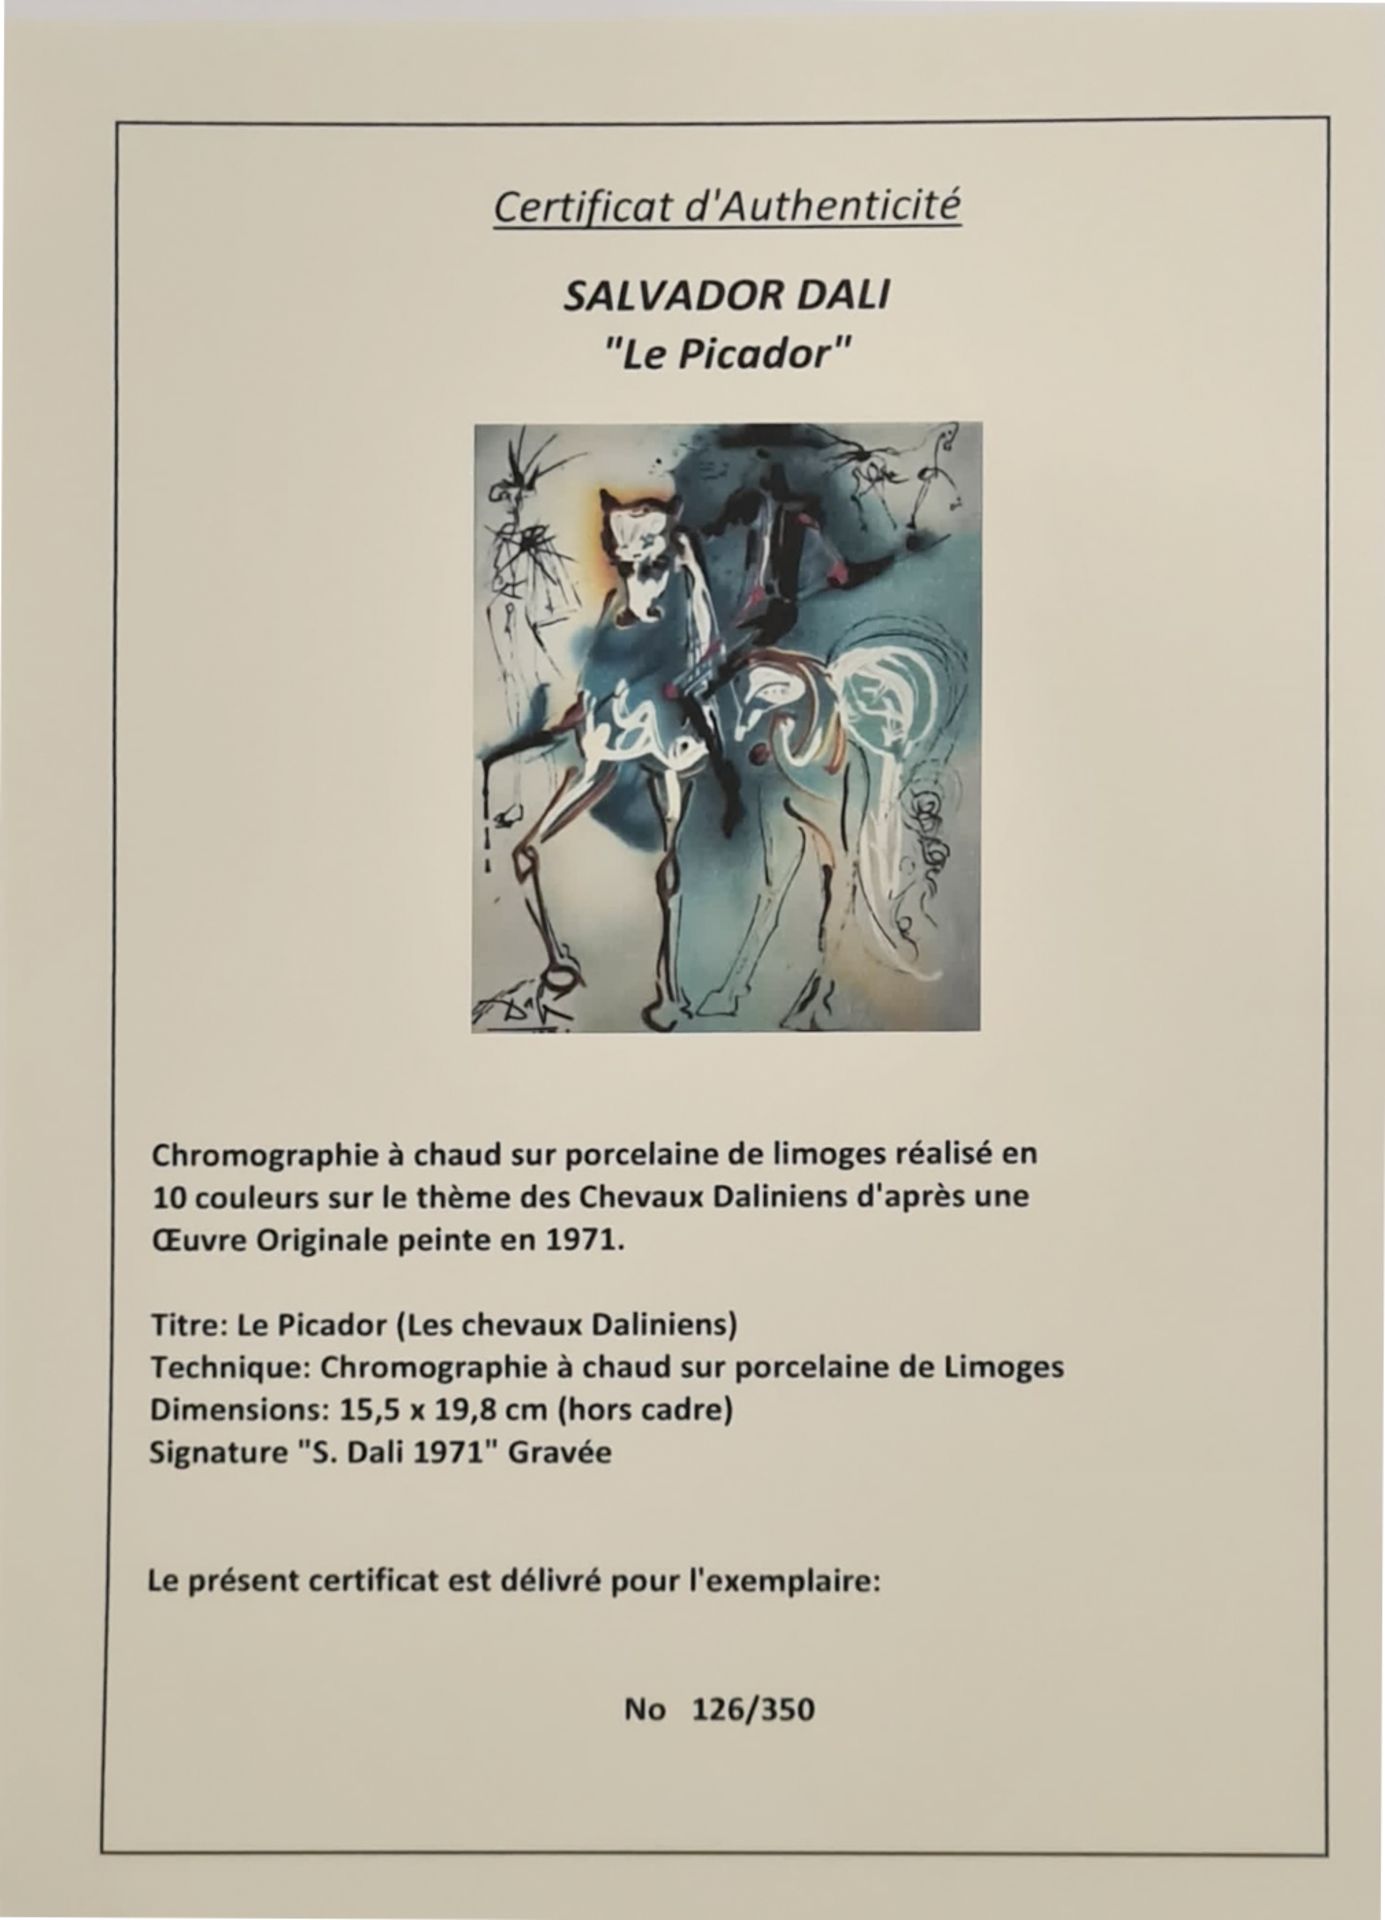 Salvador Dali (1904 - 1989) - Image 9 of 10